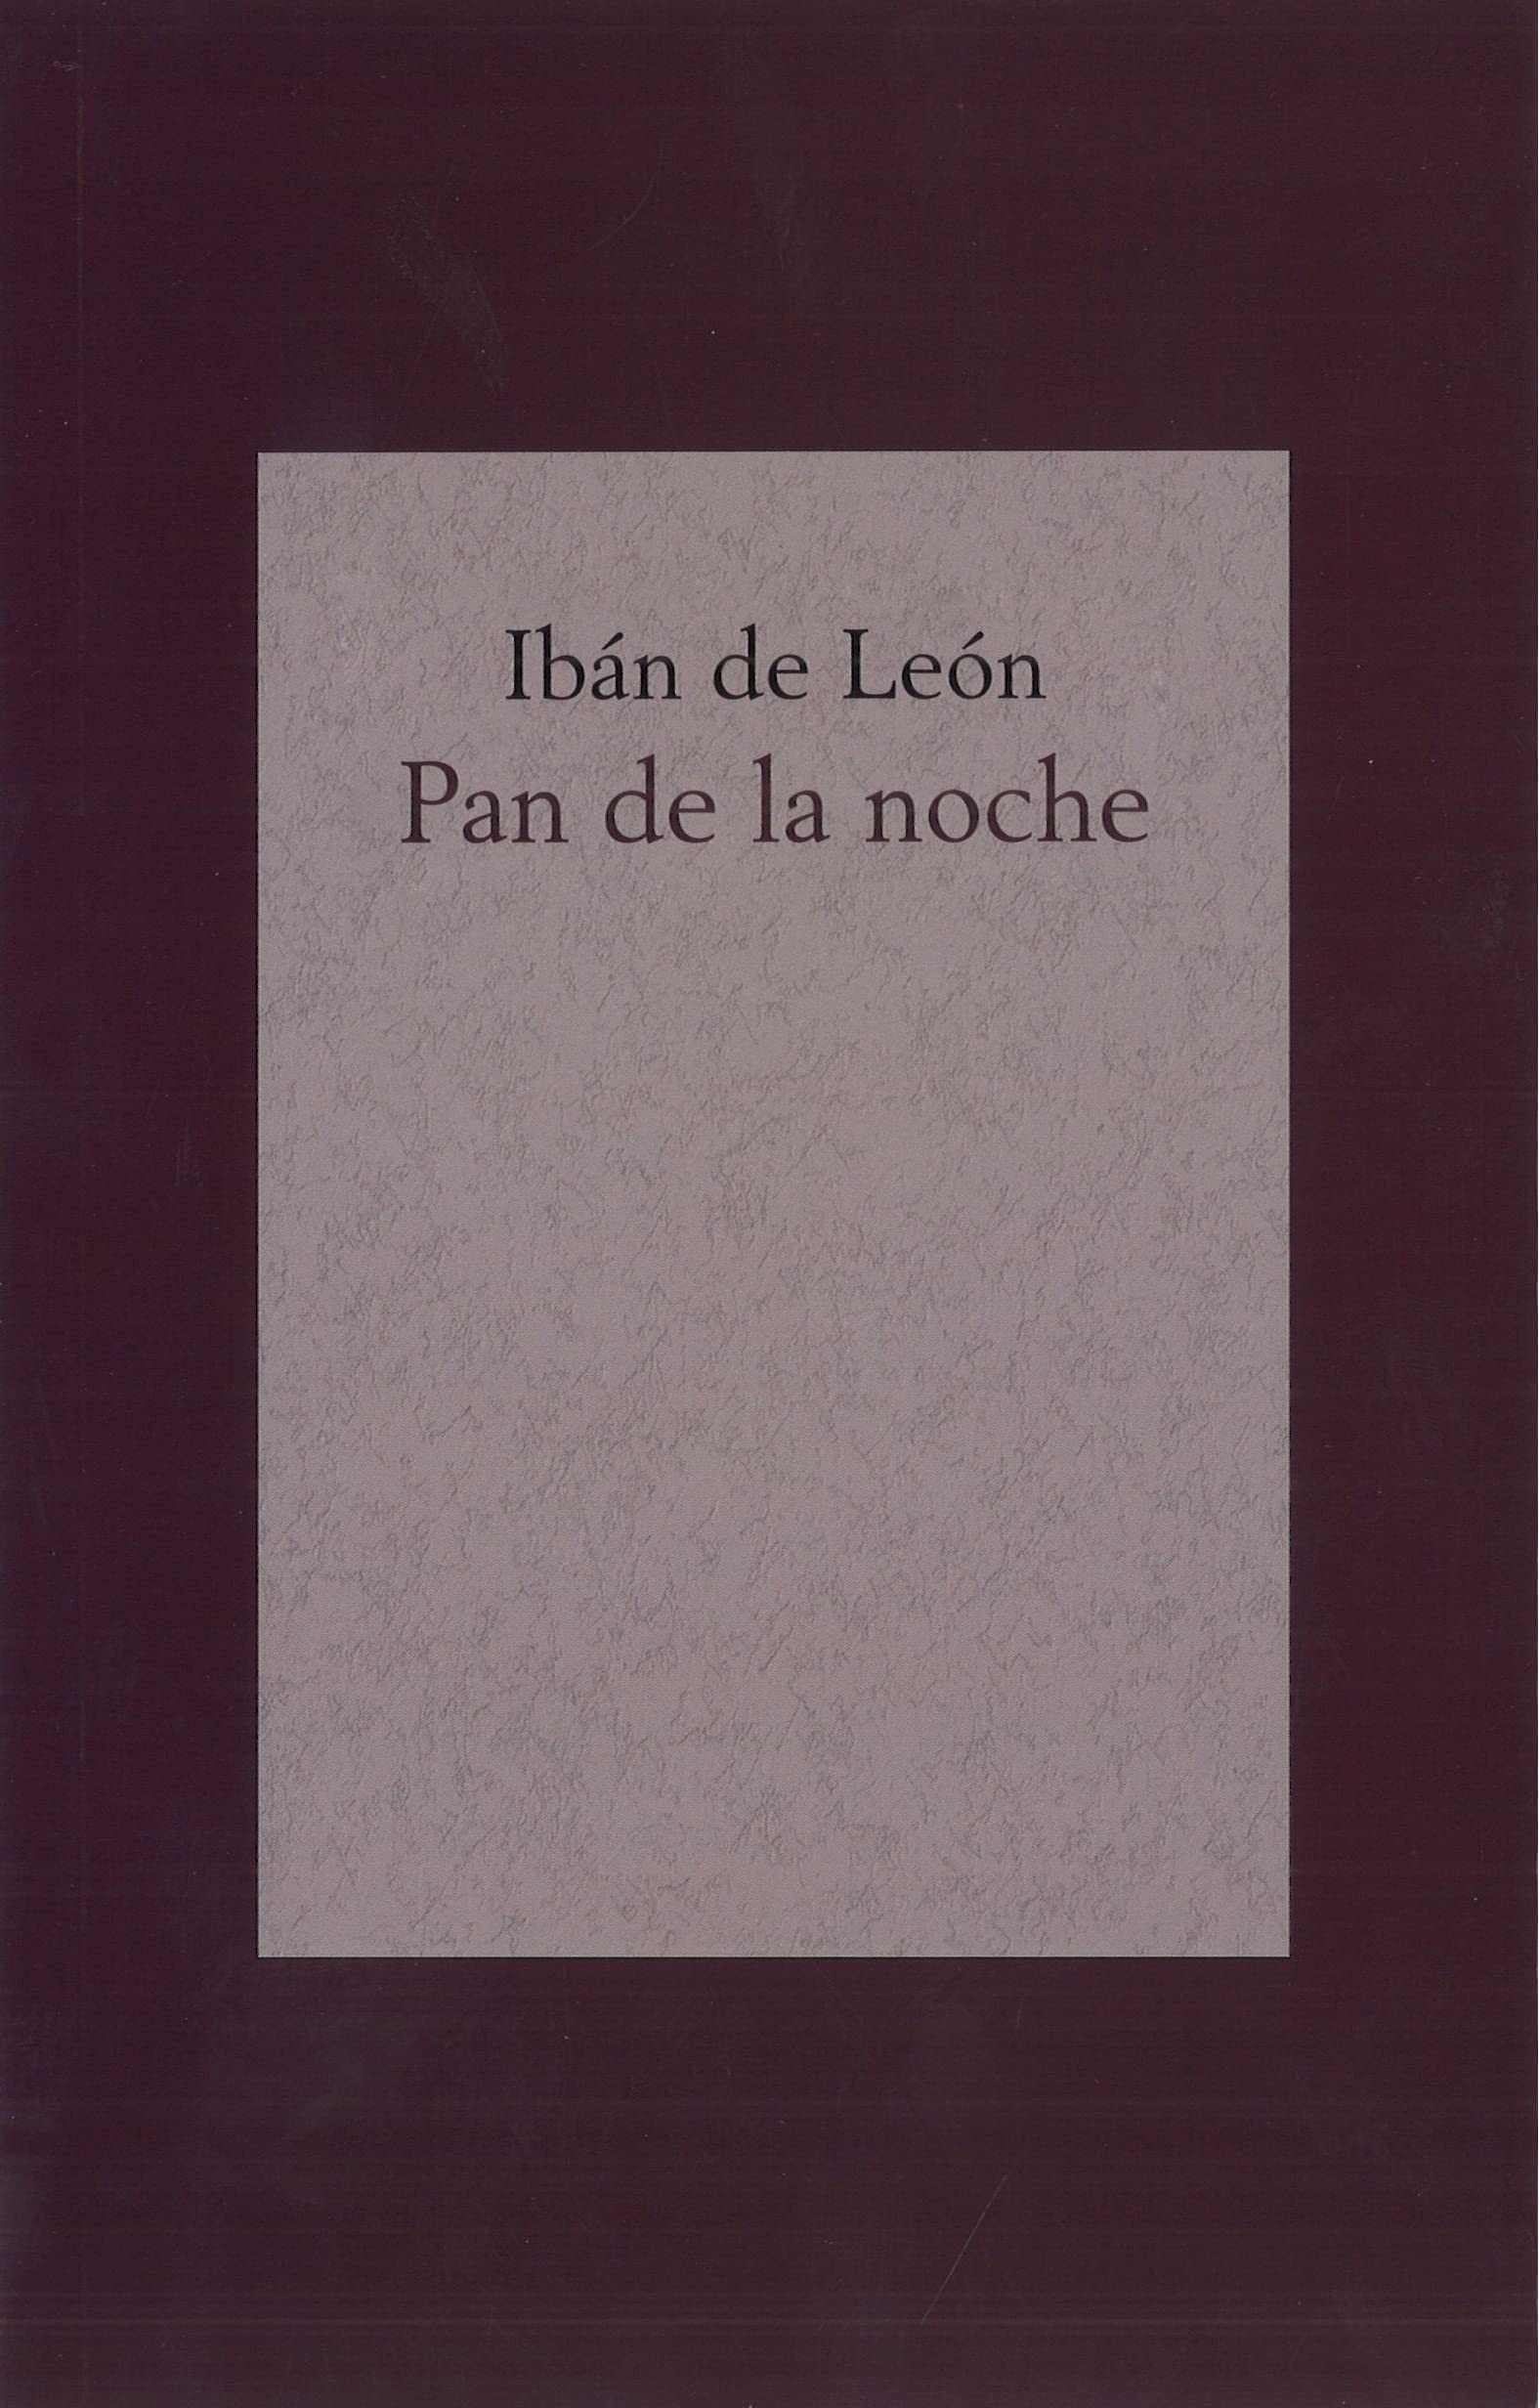 Portada de Pan de la noche, de Ibán de León.